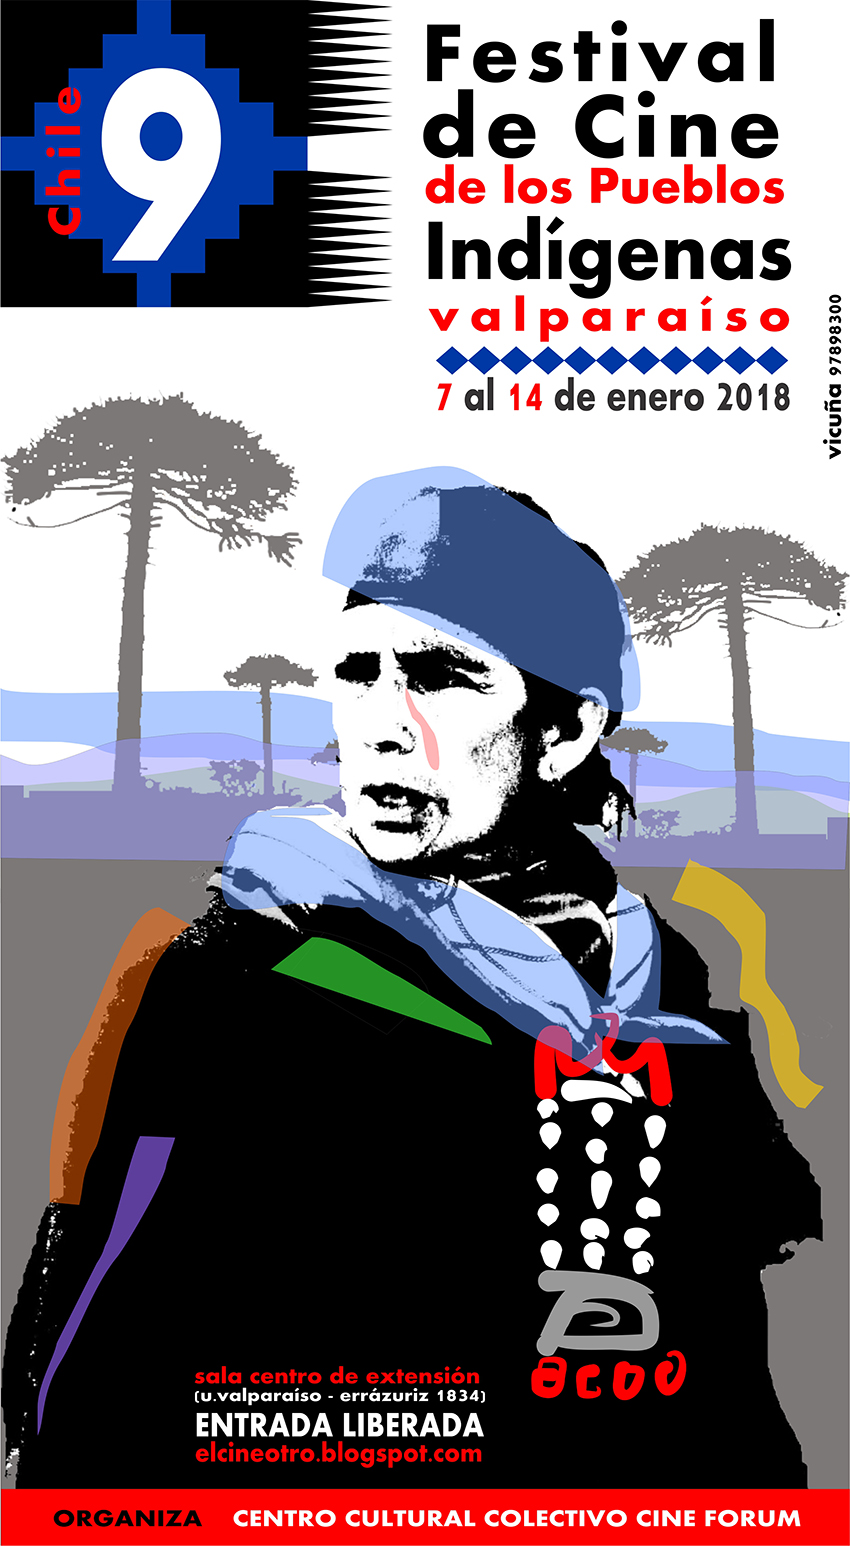 Presentation of “Mailen” in the 9º Festival de Cine Indigena de Valparaíso